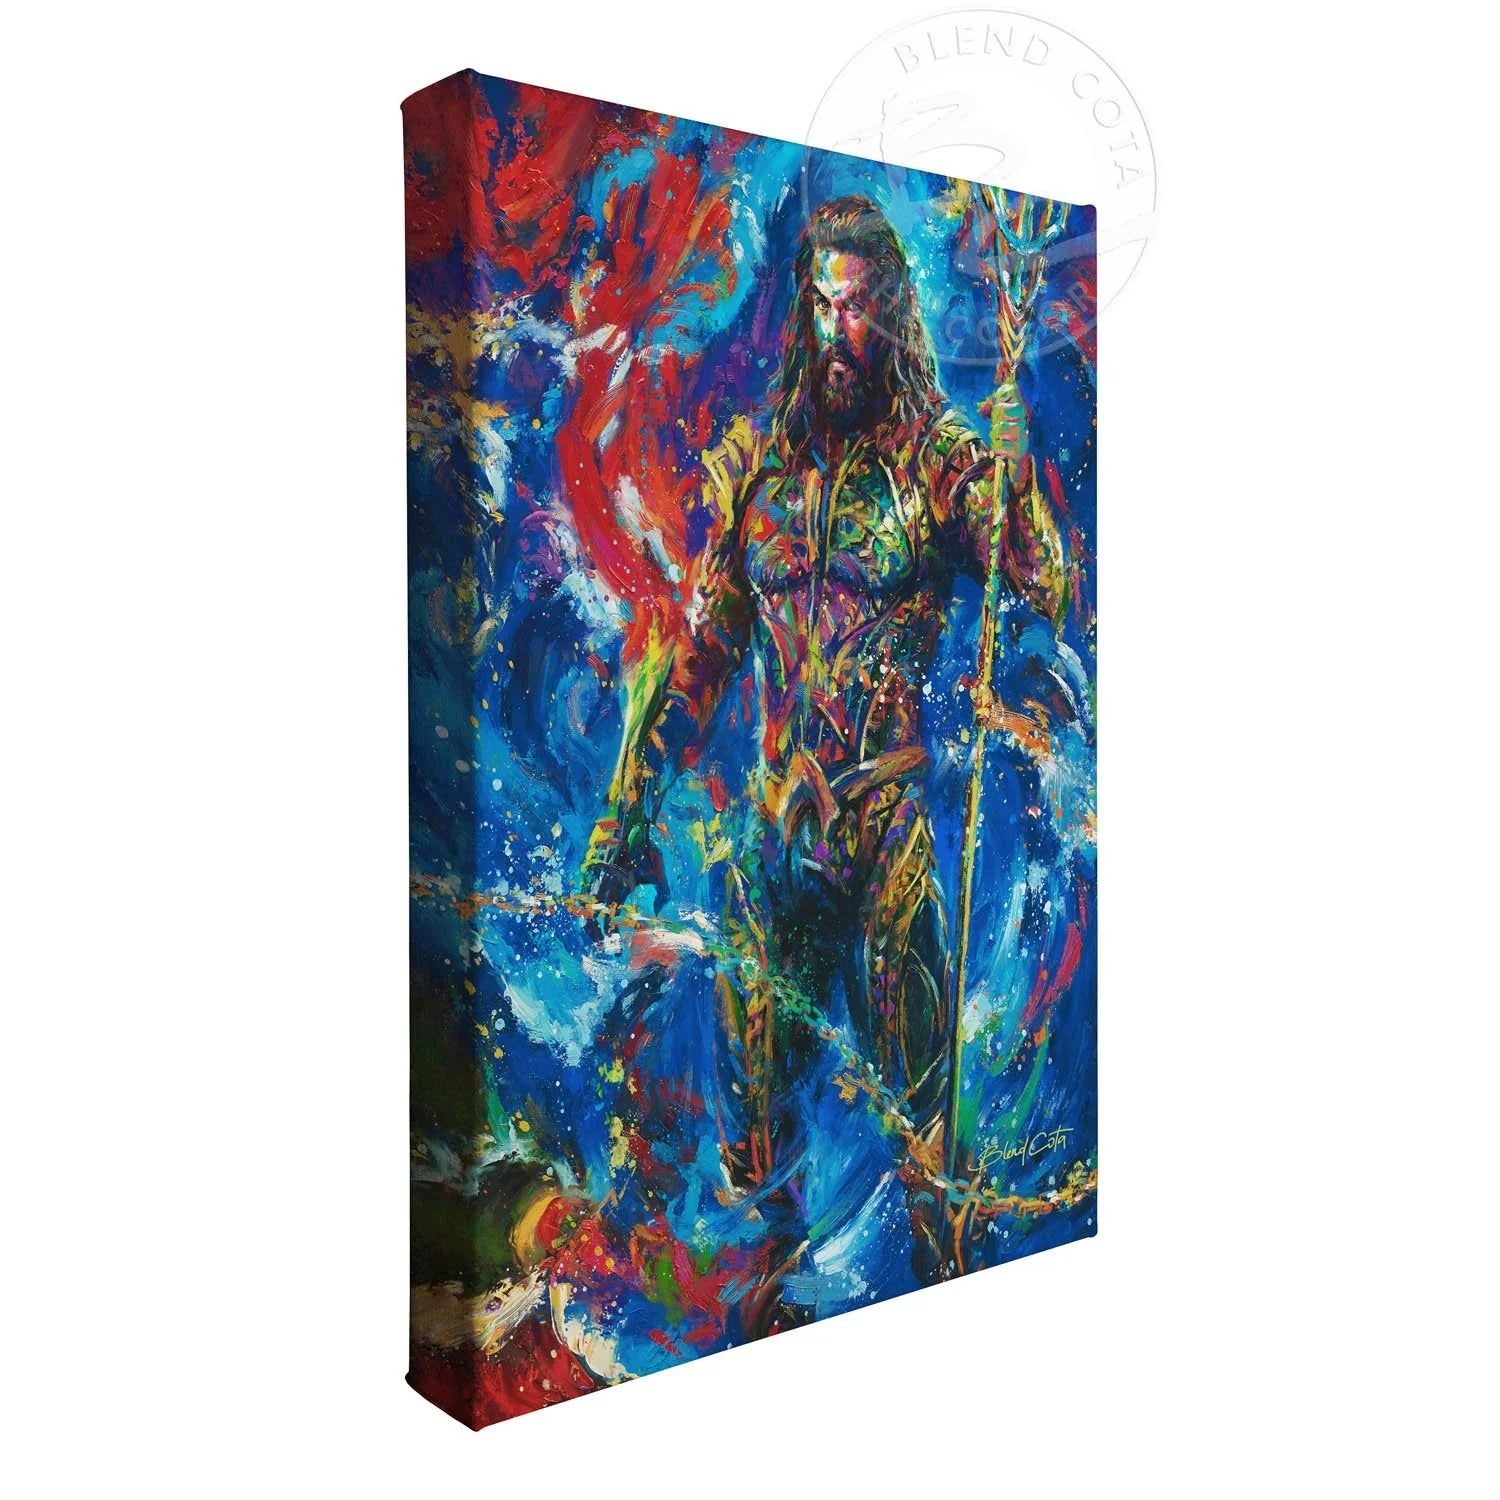 Aqua man - Gallery Wrapped Canvas